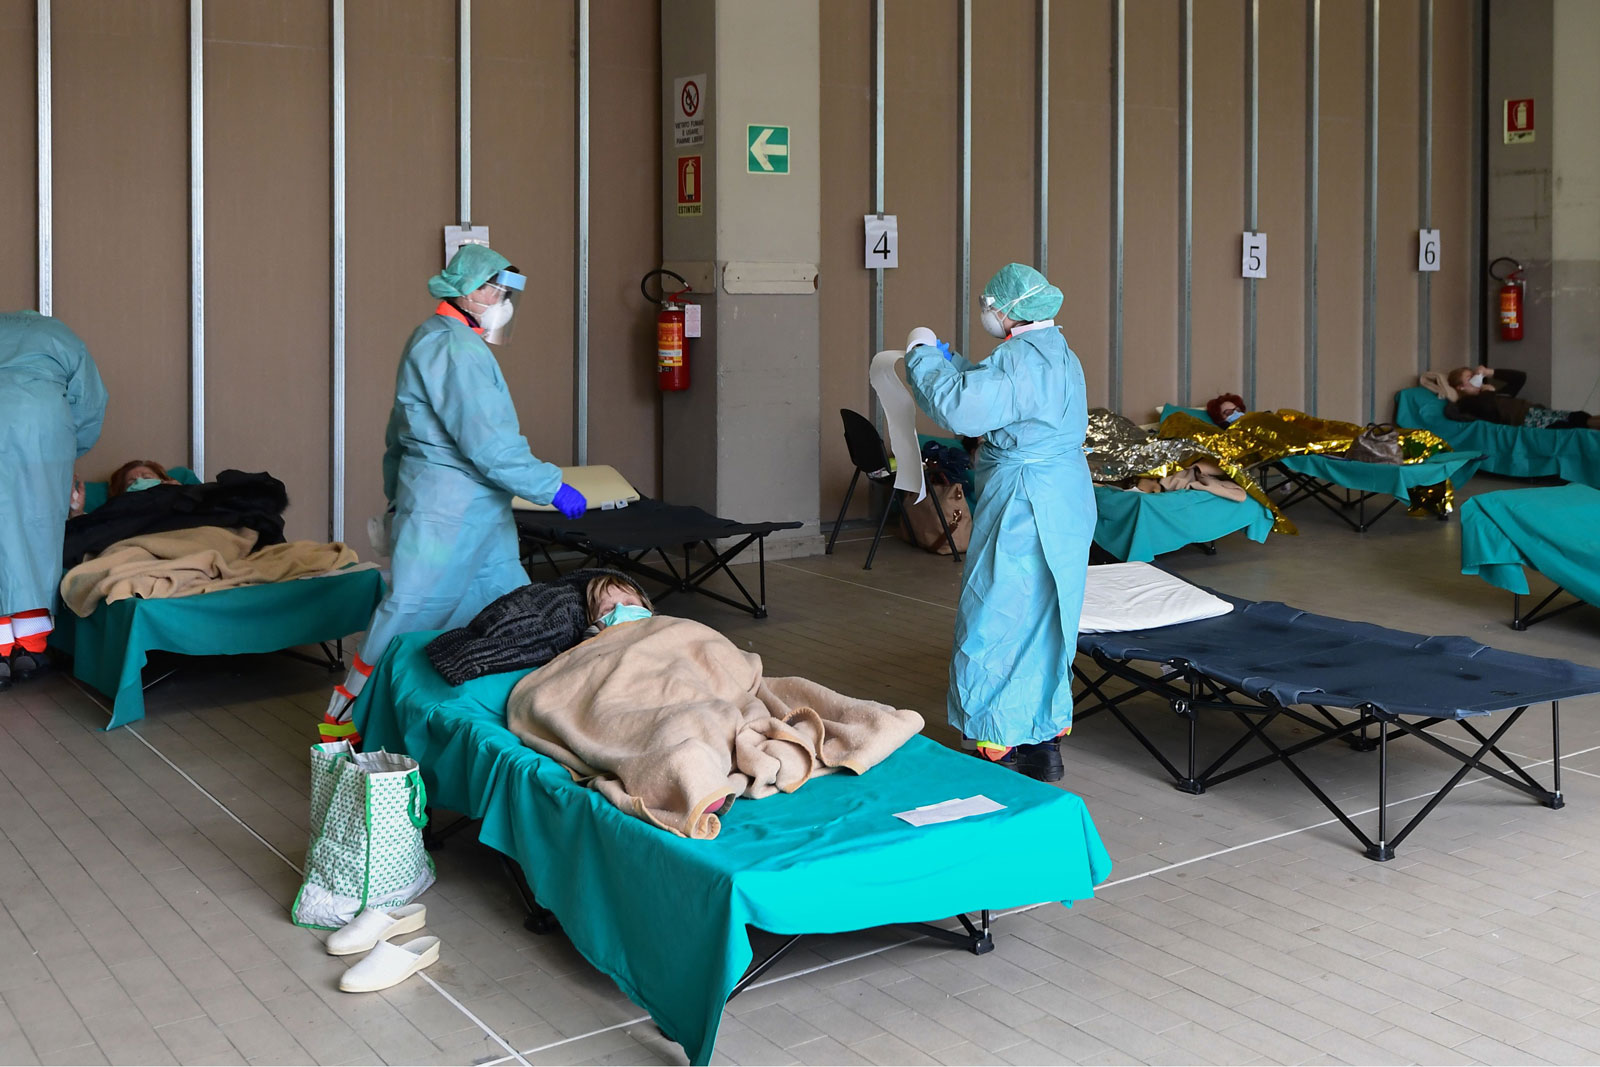 Emergency coronavirus ward in Italy